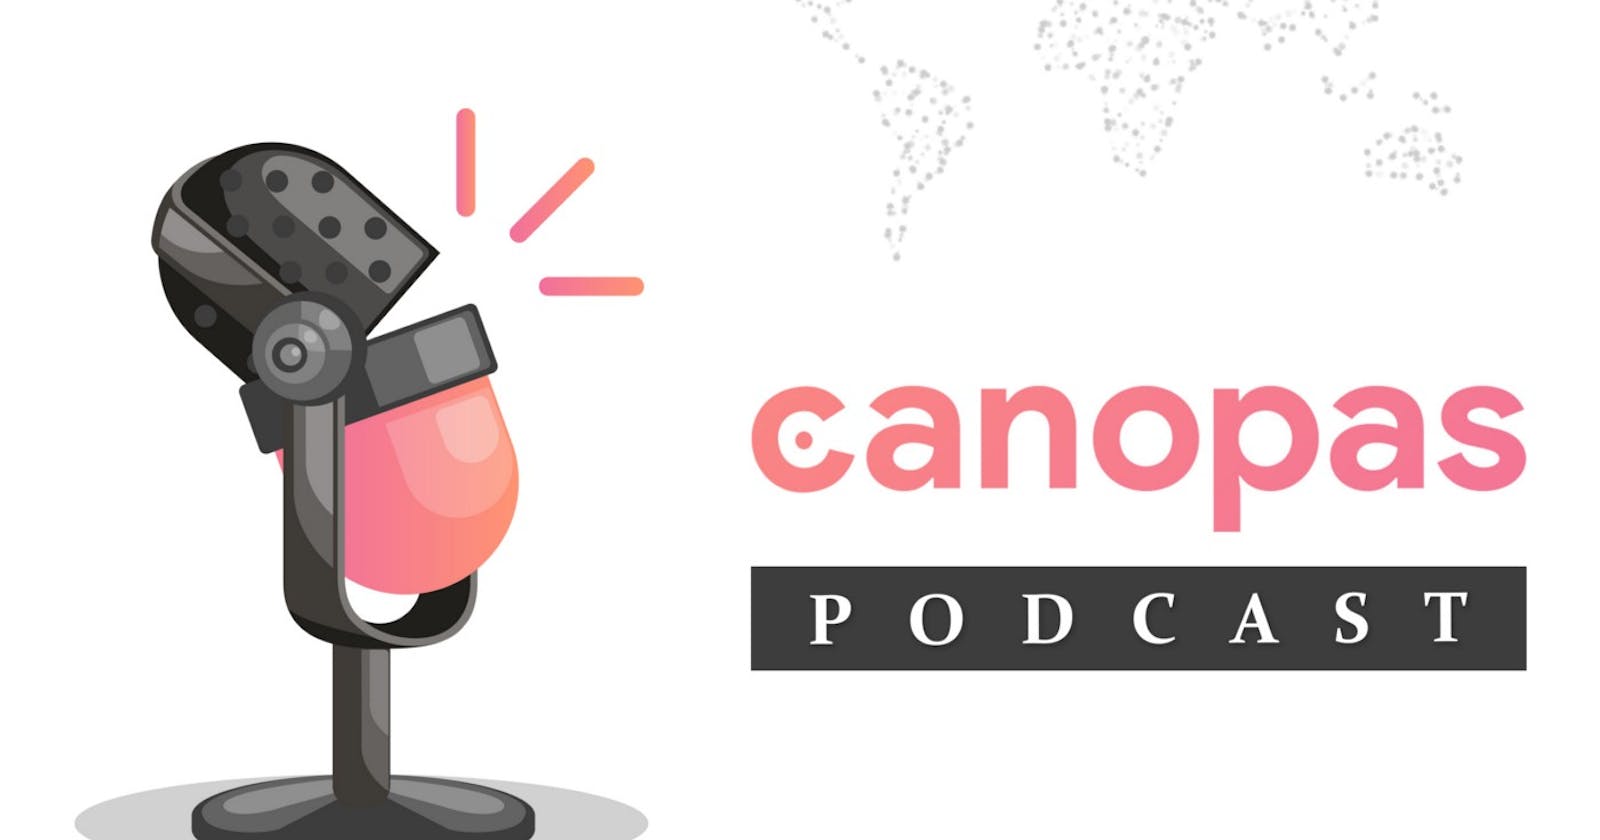 Canopas Podcast 7— REST vs. GraphQL